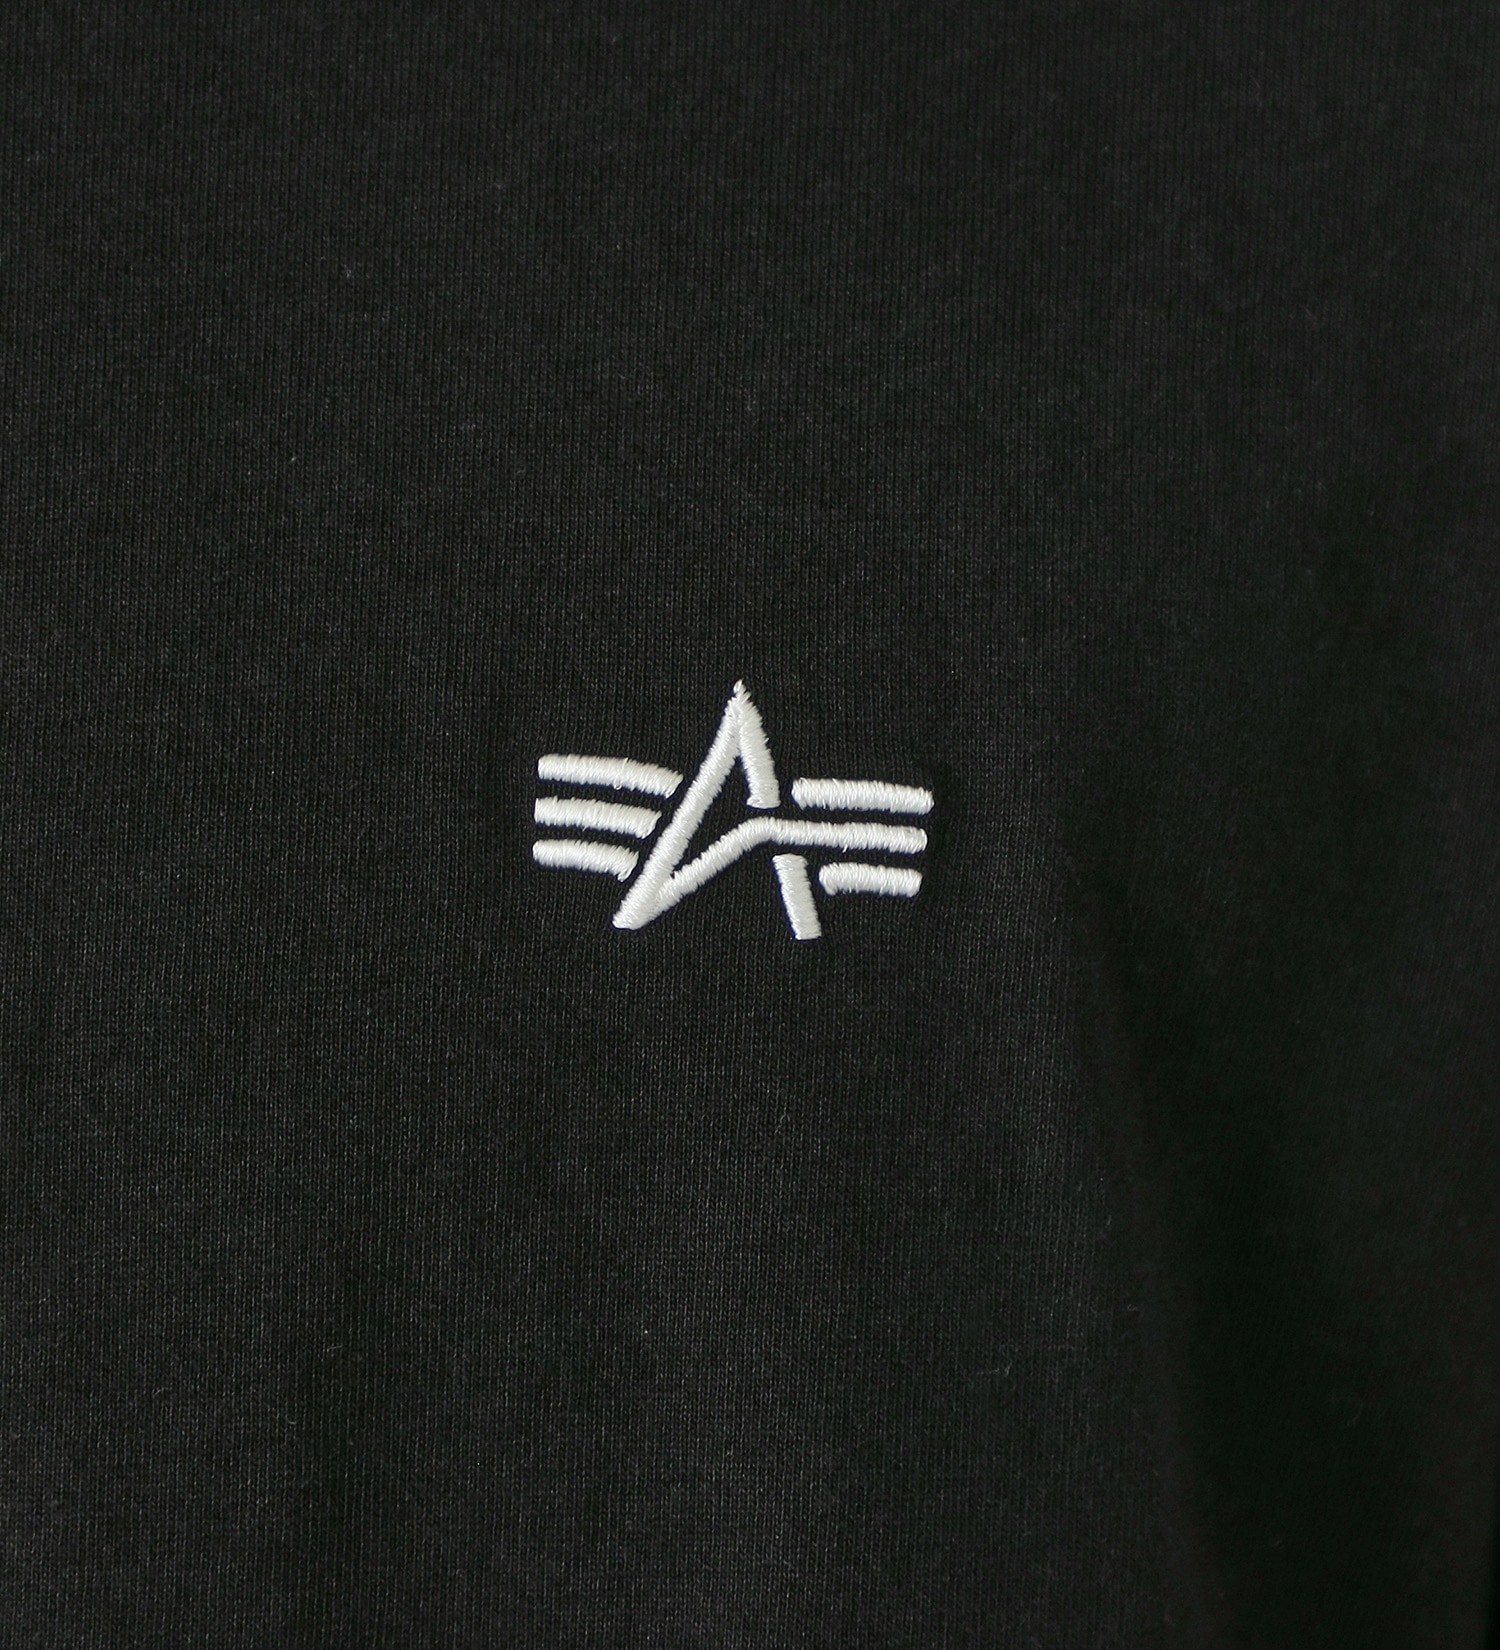 ALPHA(アルファ)の【GW SALE】バックプリントボックスロゴ 長袖Tシャツ(FIGHTER)|トップス/Tシャツ/カットソー/メンズ|ブラック